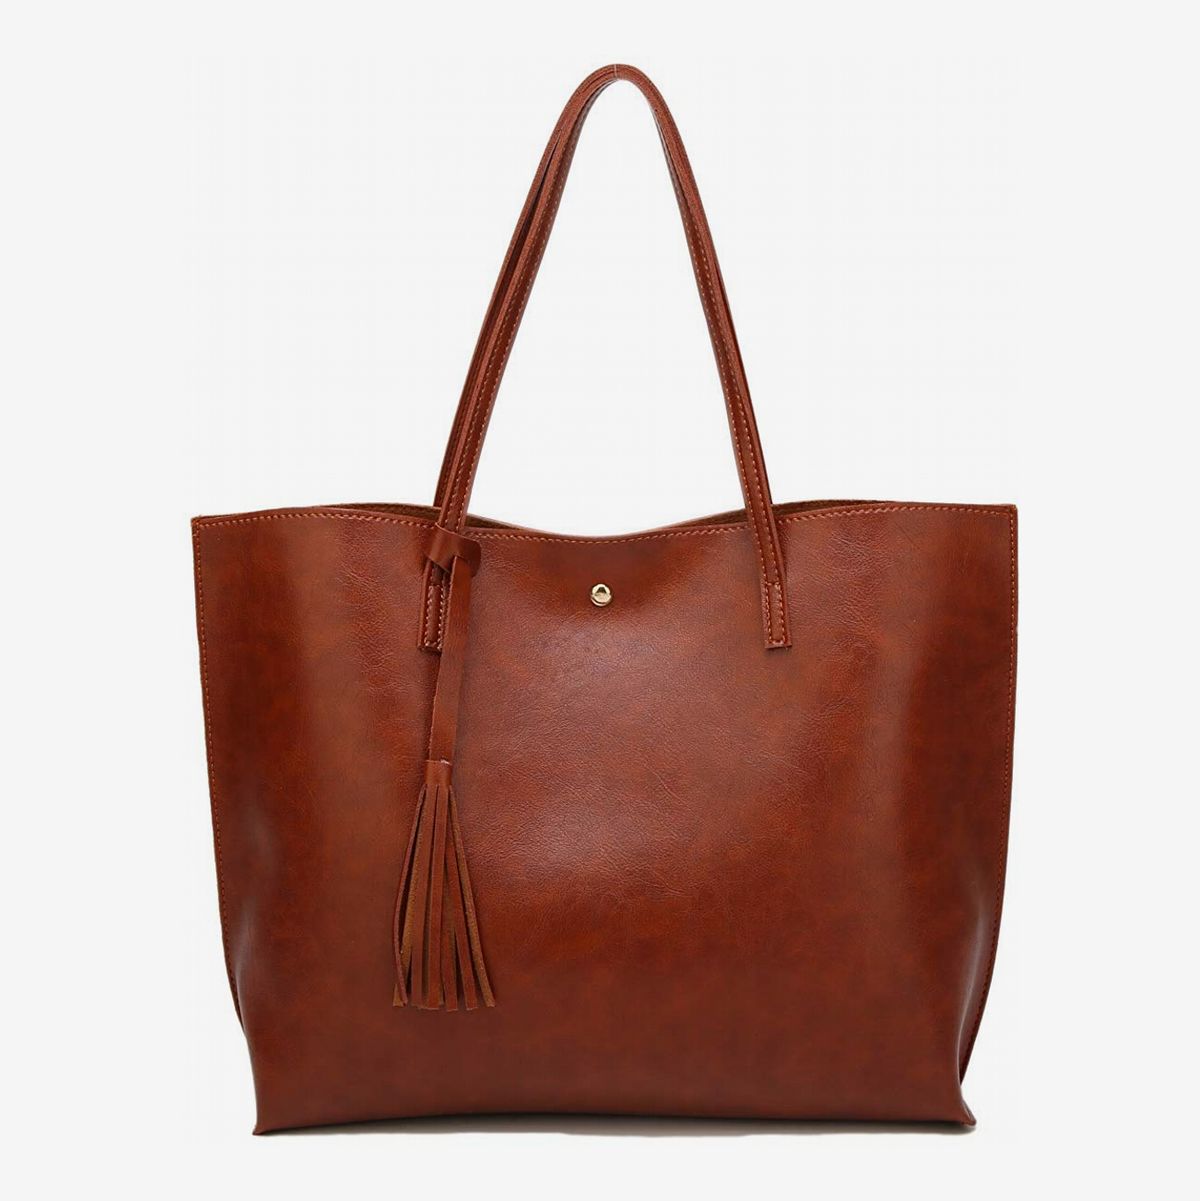 Tote Bag for Women Purses and Handbags Top Handle Shoulder Bag